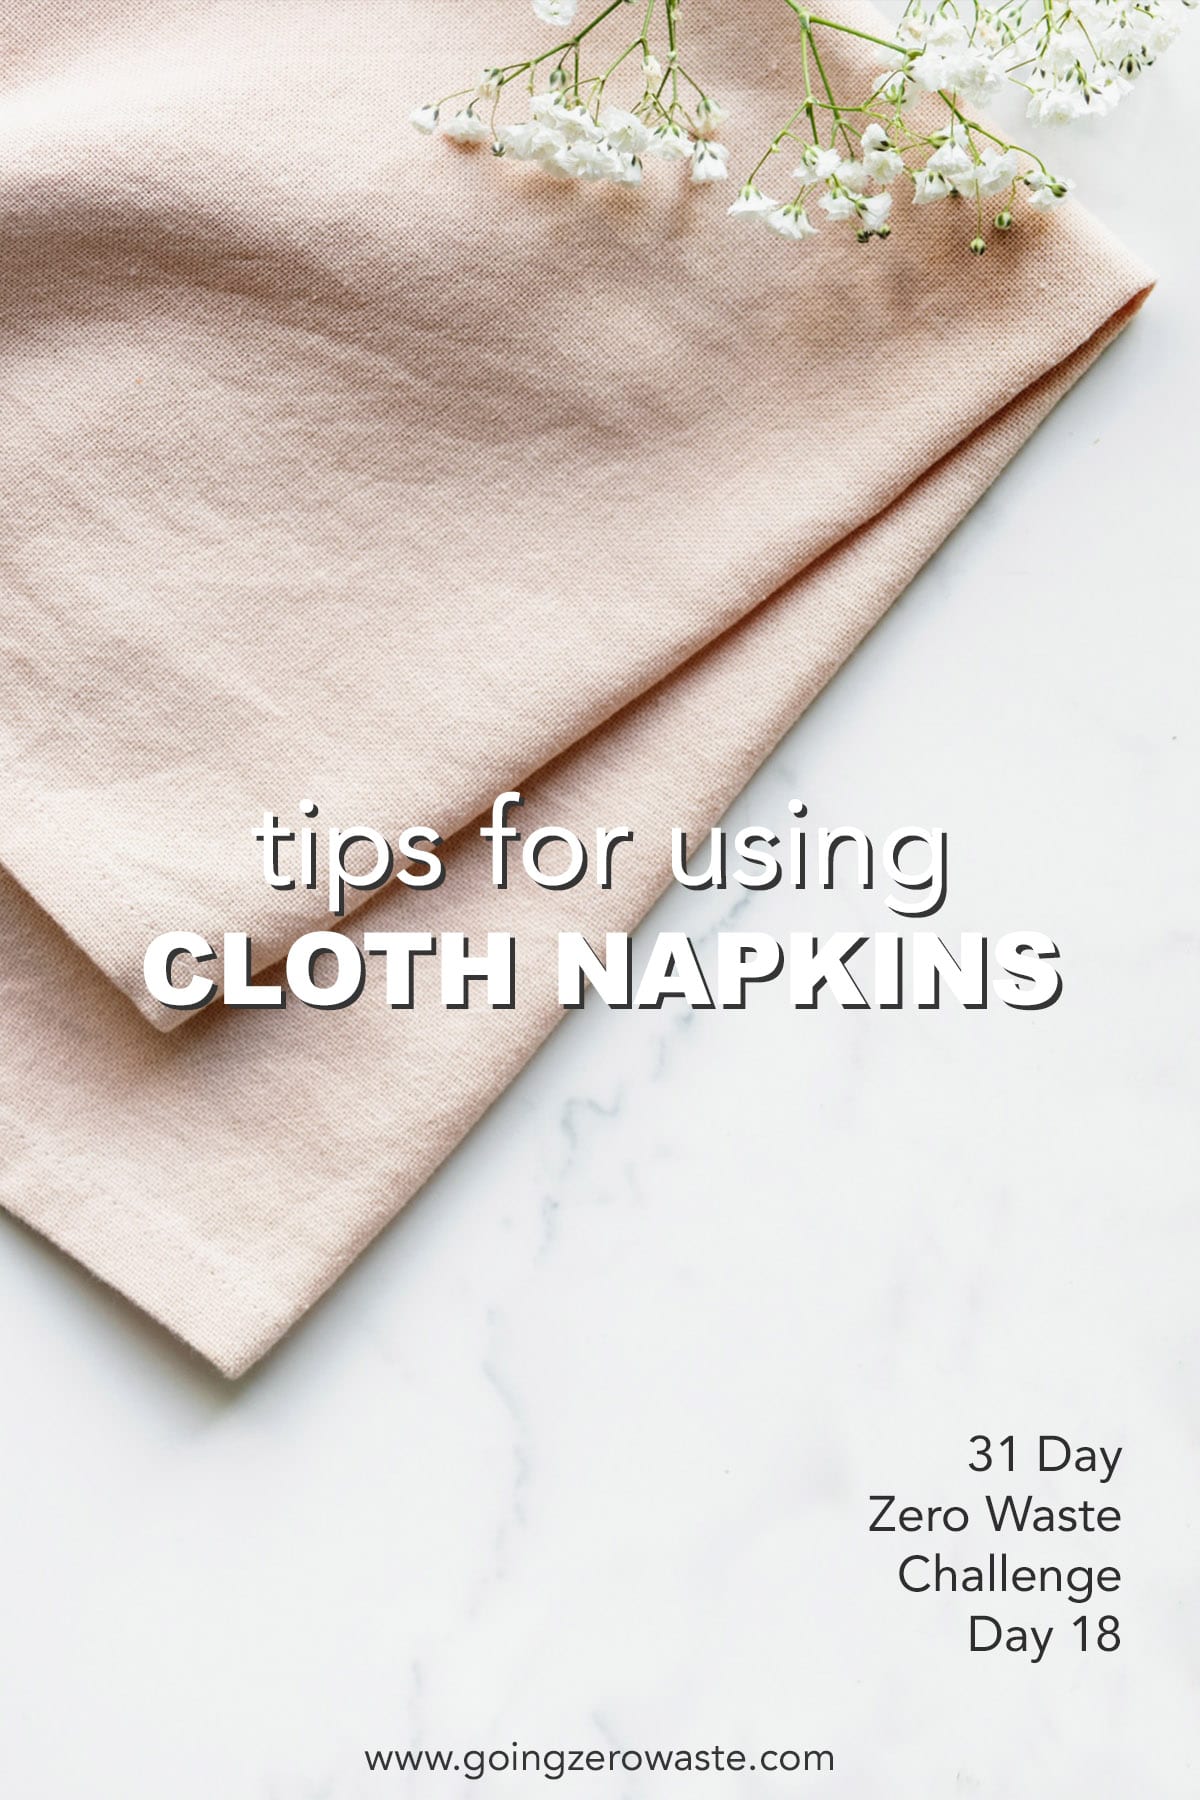 Tips for Using Cloth Napkins - Day 18 of the Zero Waste Challenge from www.goingzerowaste.com #zerowaste #ecofriendly #gogreen #sustainable #zerowastechallenge #challenge #sustainablelivingchallenge 